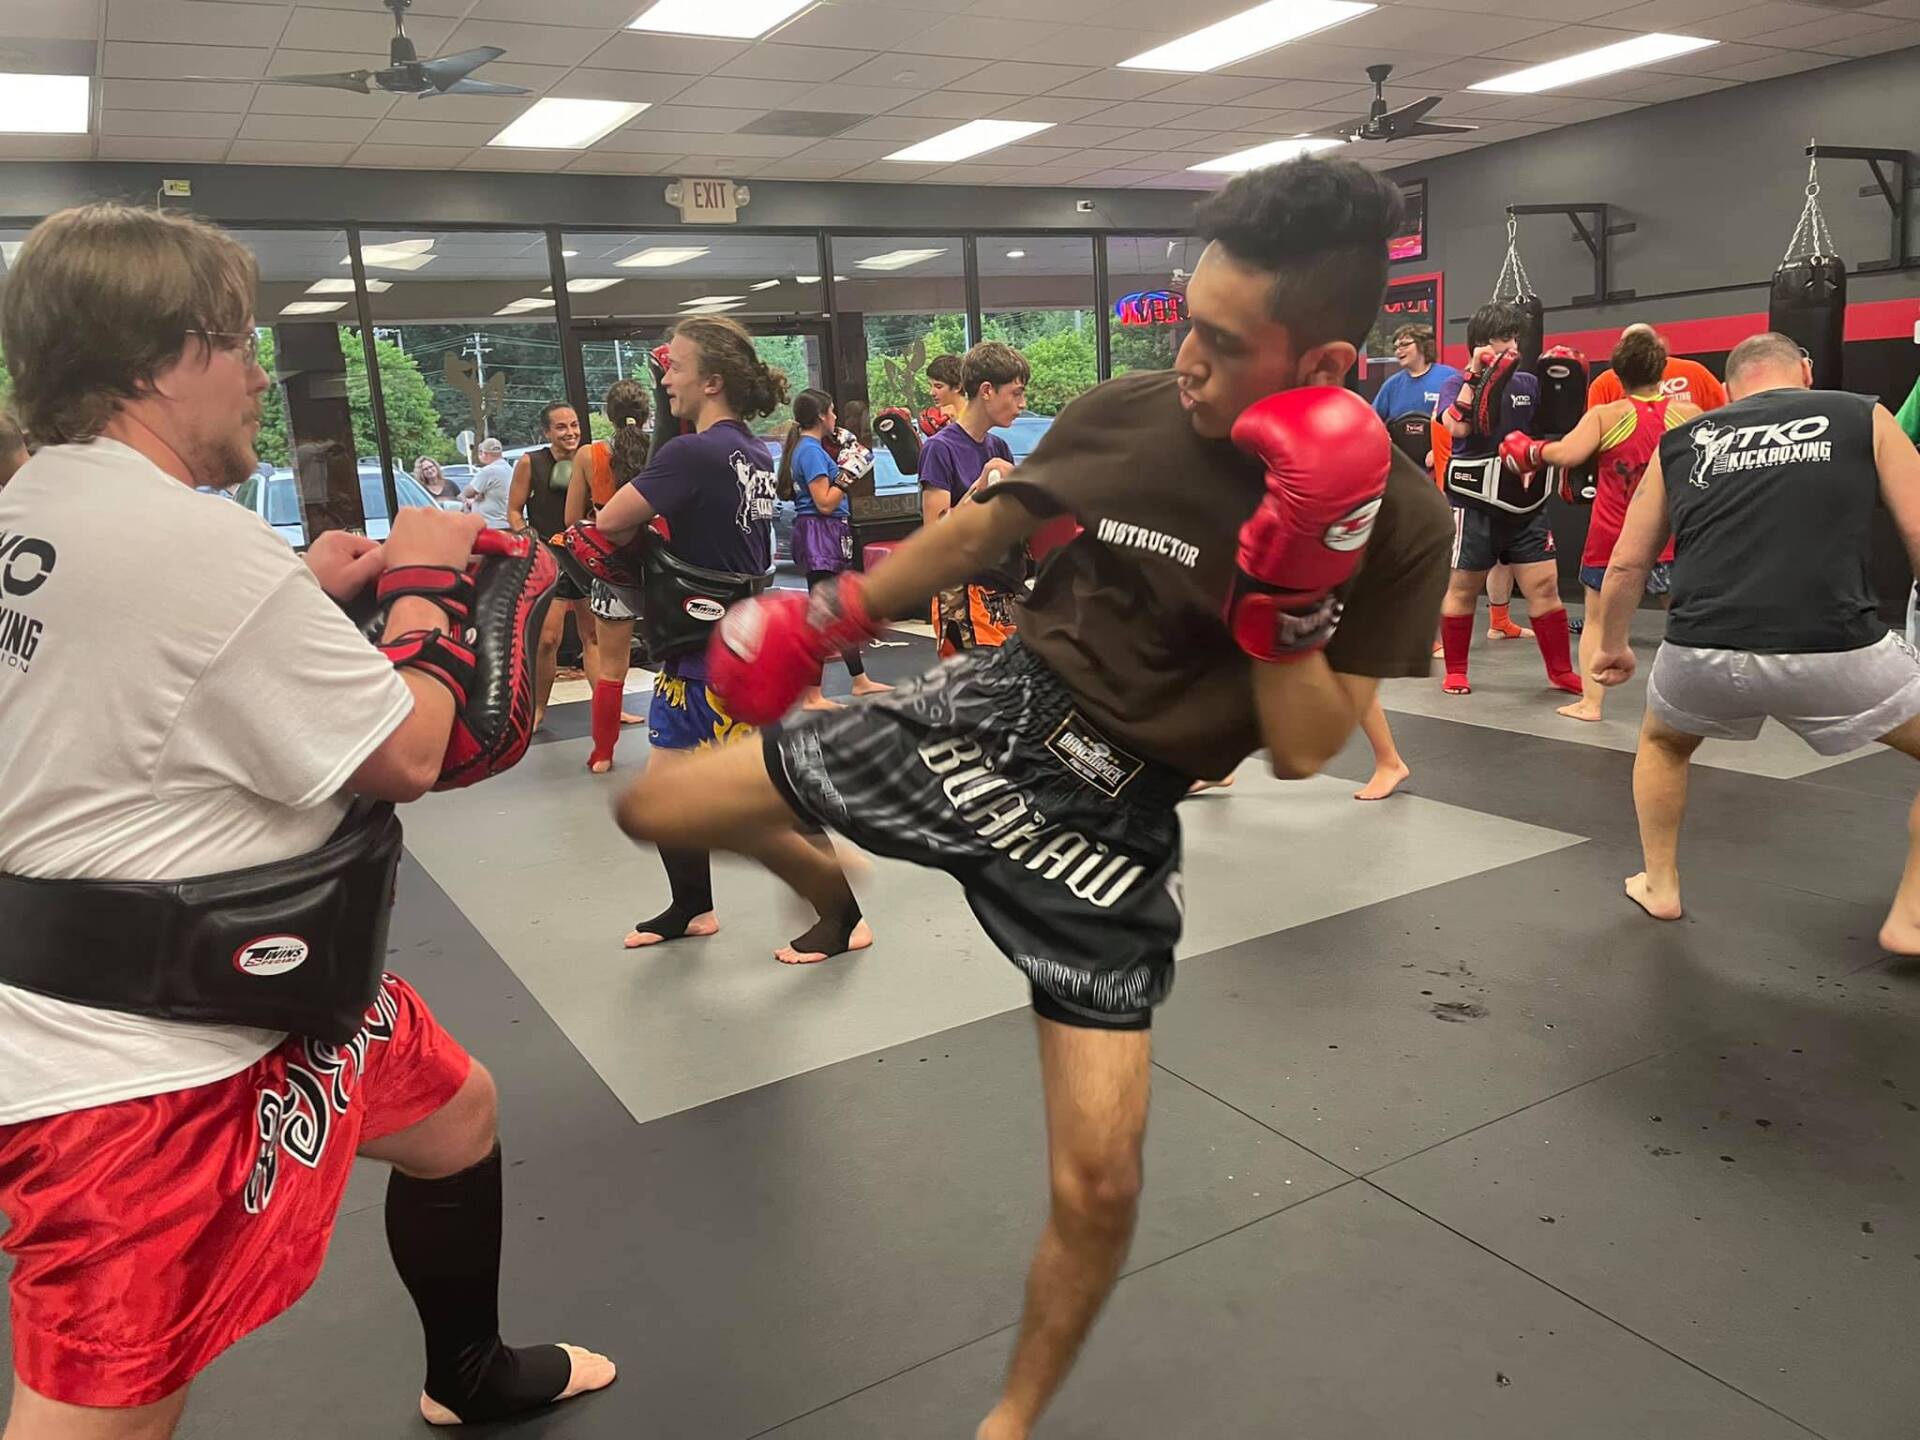 Training in Thailand - Kru Certified Muay Thai Instruction in Statesville, NC